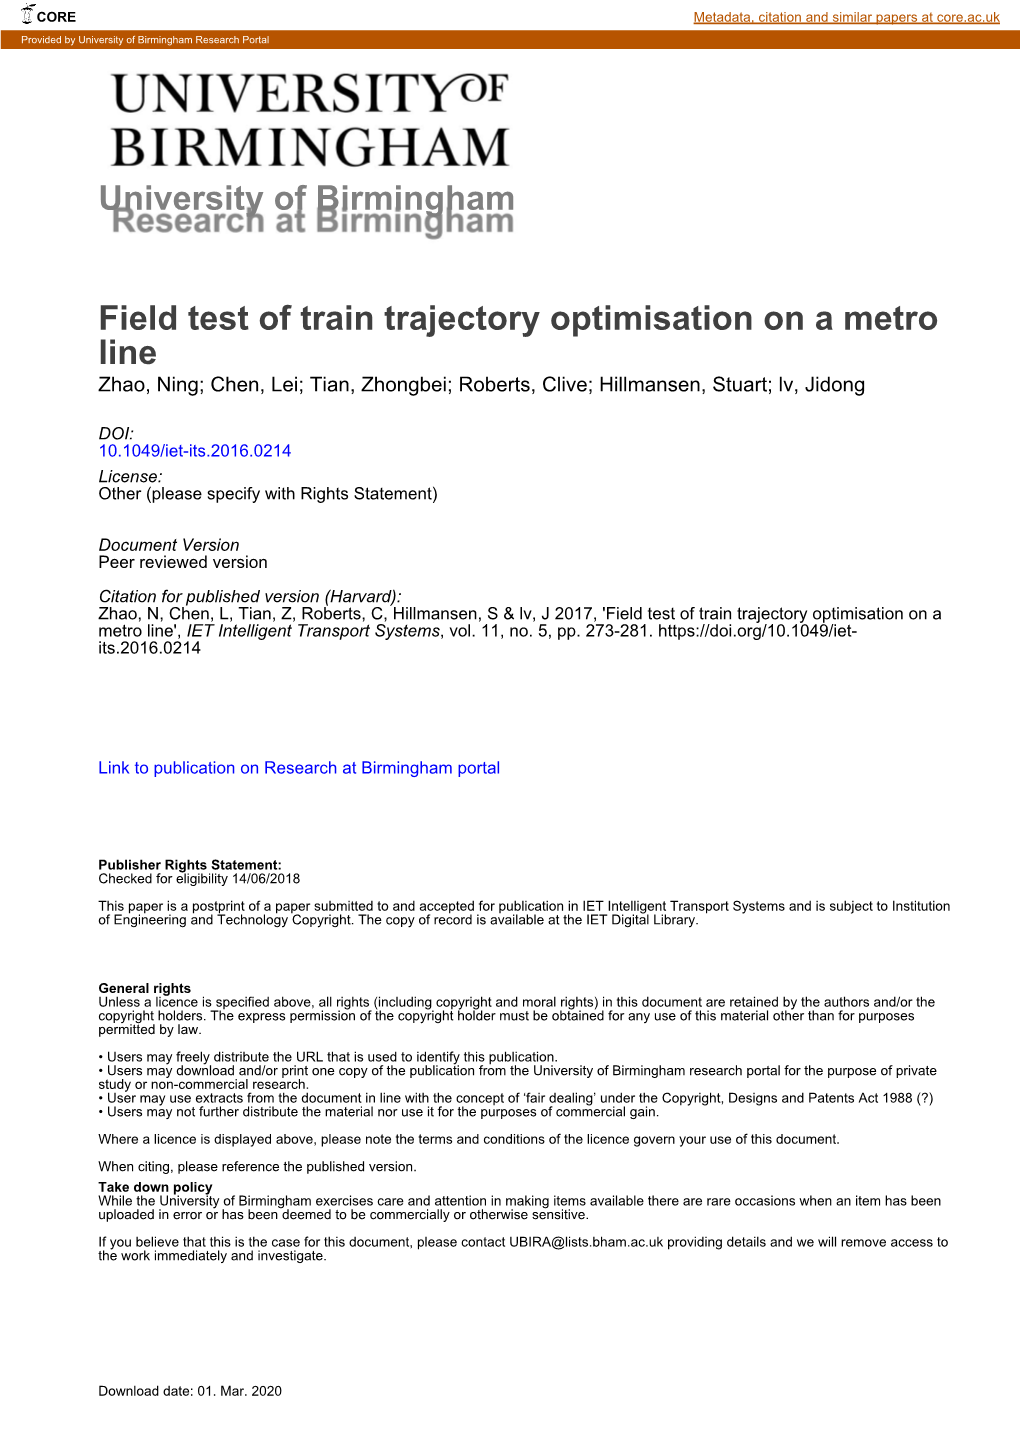 University of Birmingham Field Test of Train Trajectory Optimisation on a Metro Line